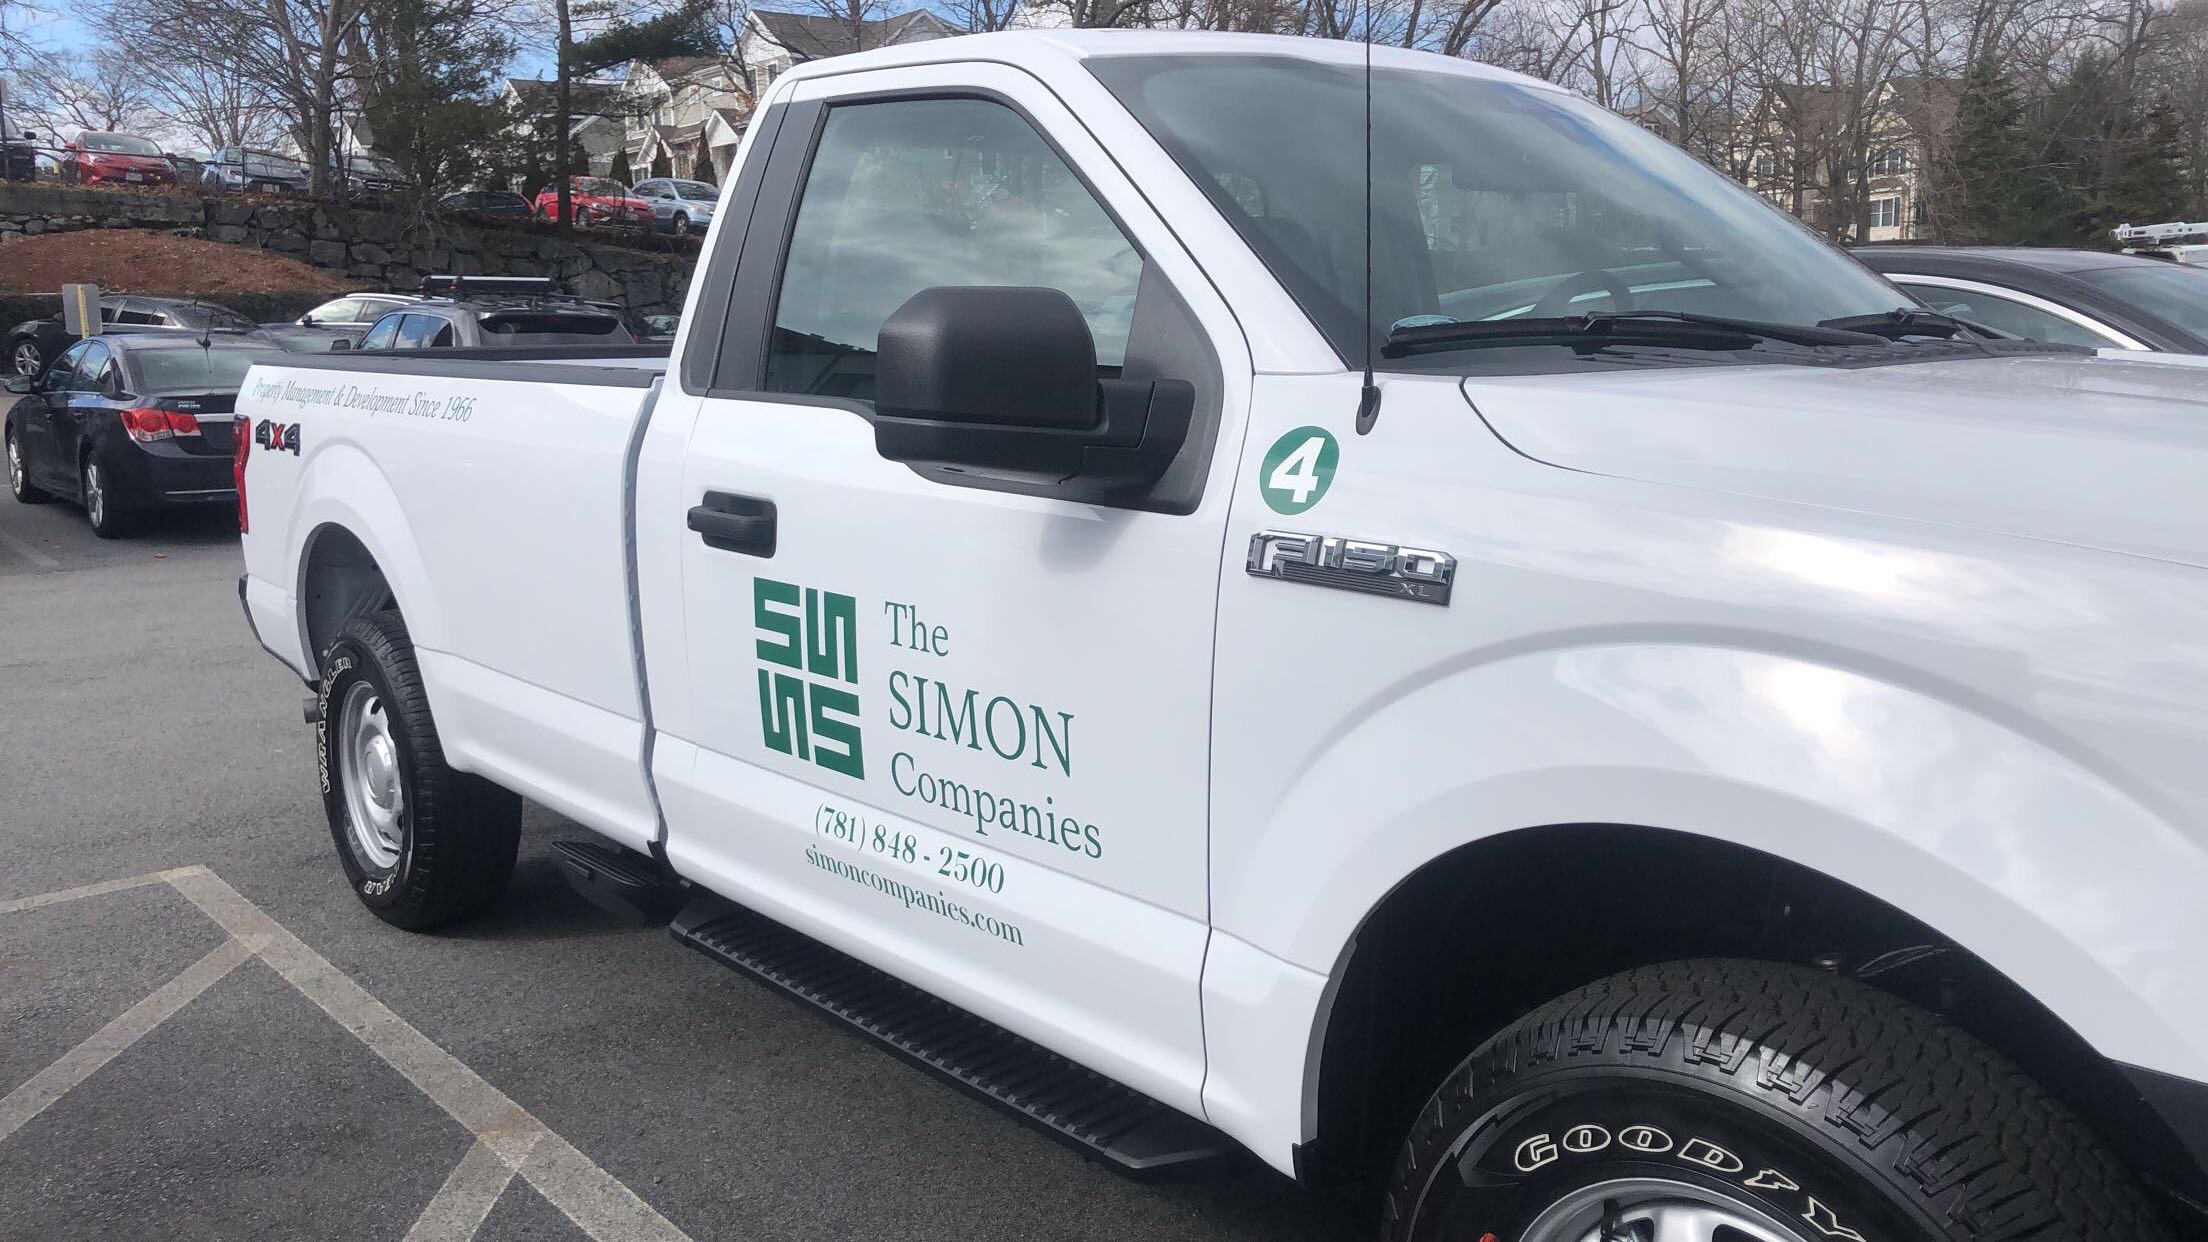 the simon companies truck decal